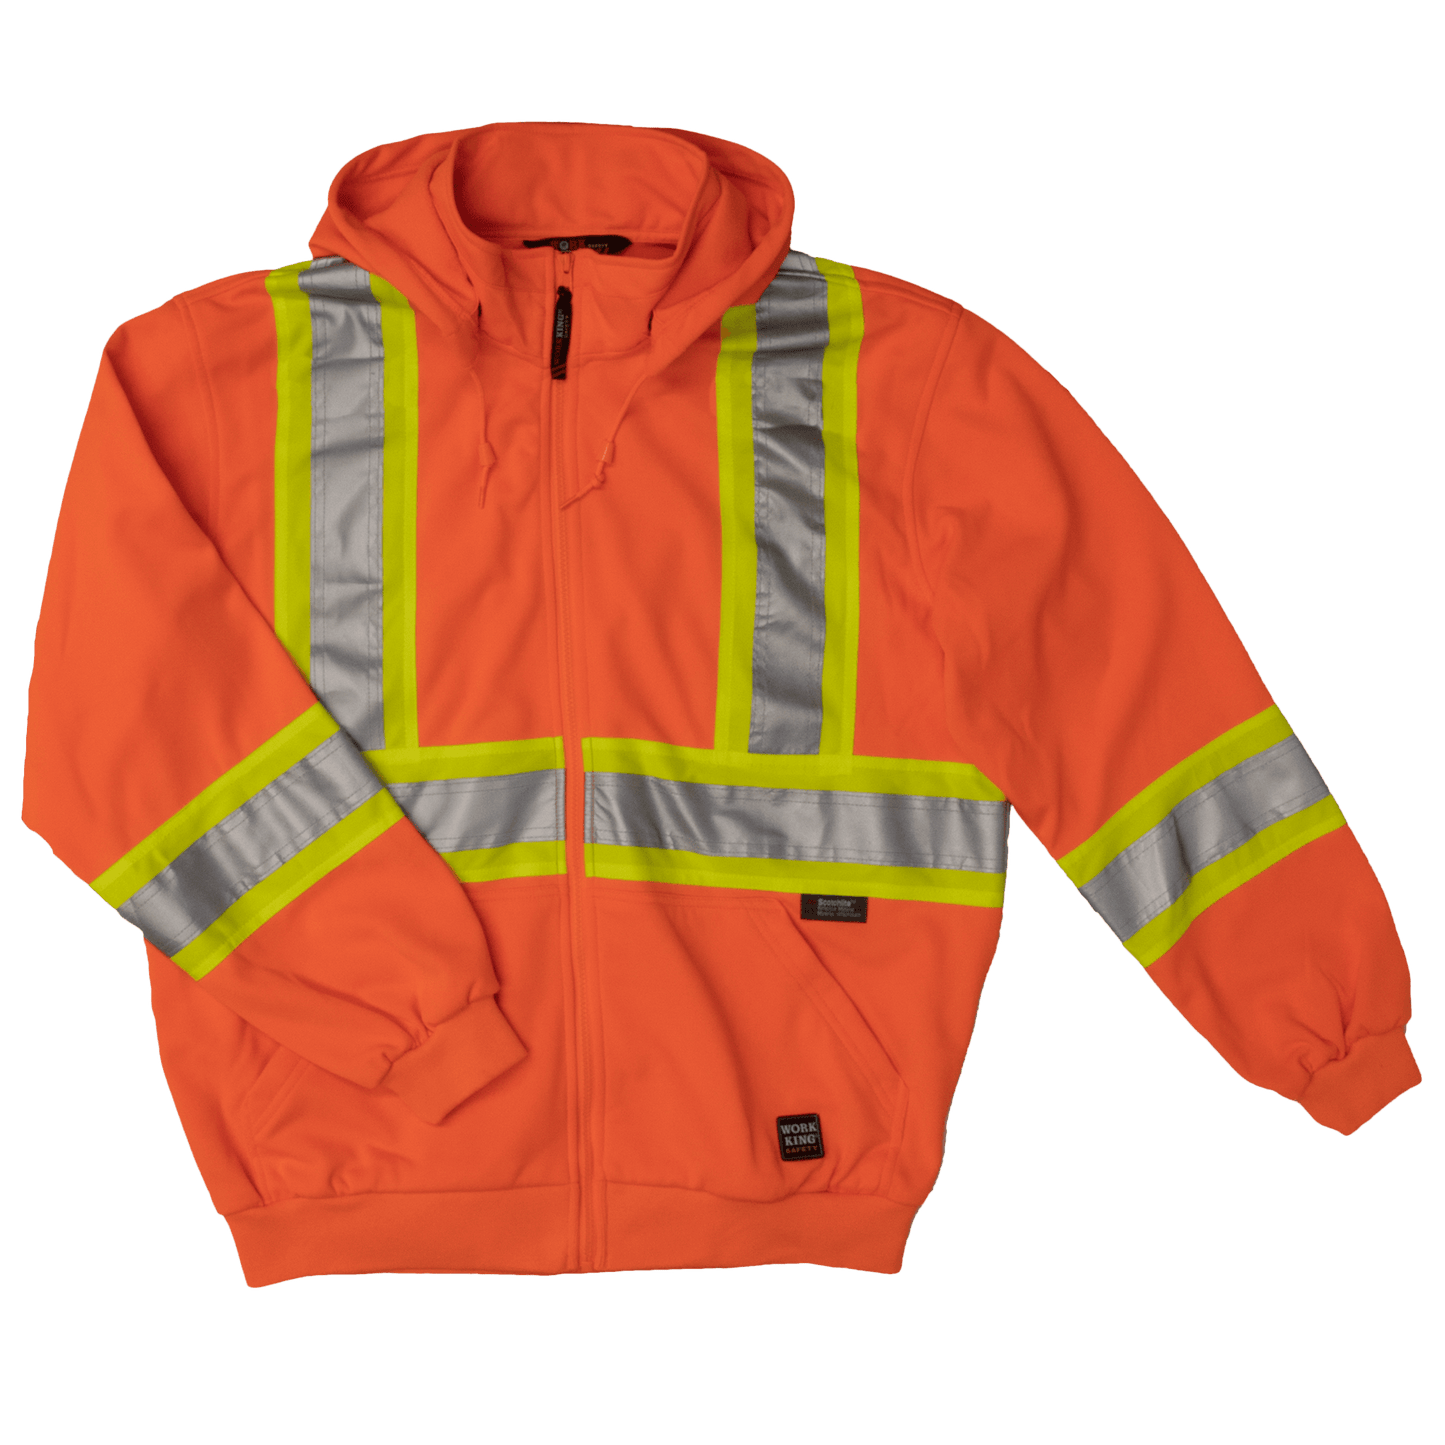 Tough Duck Unlined Safety Hoodie - S494 - Fluorescent Orange